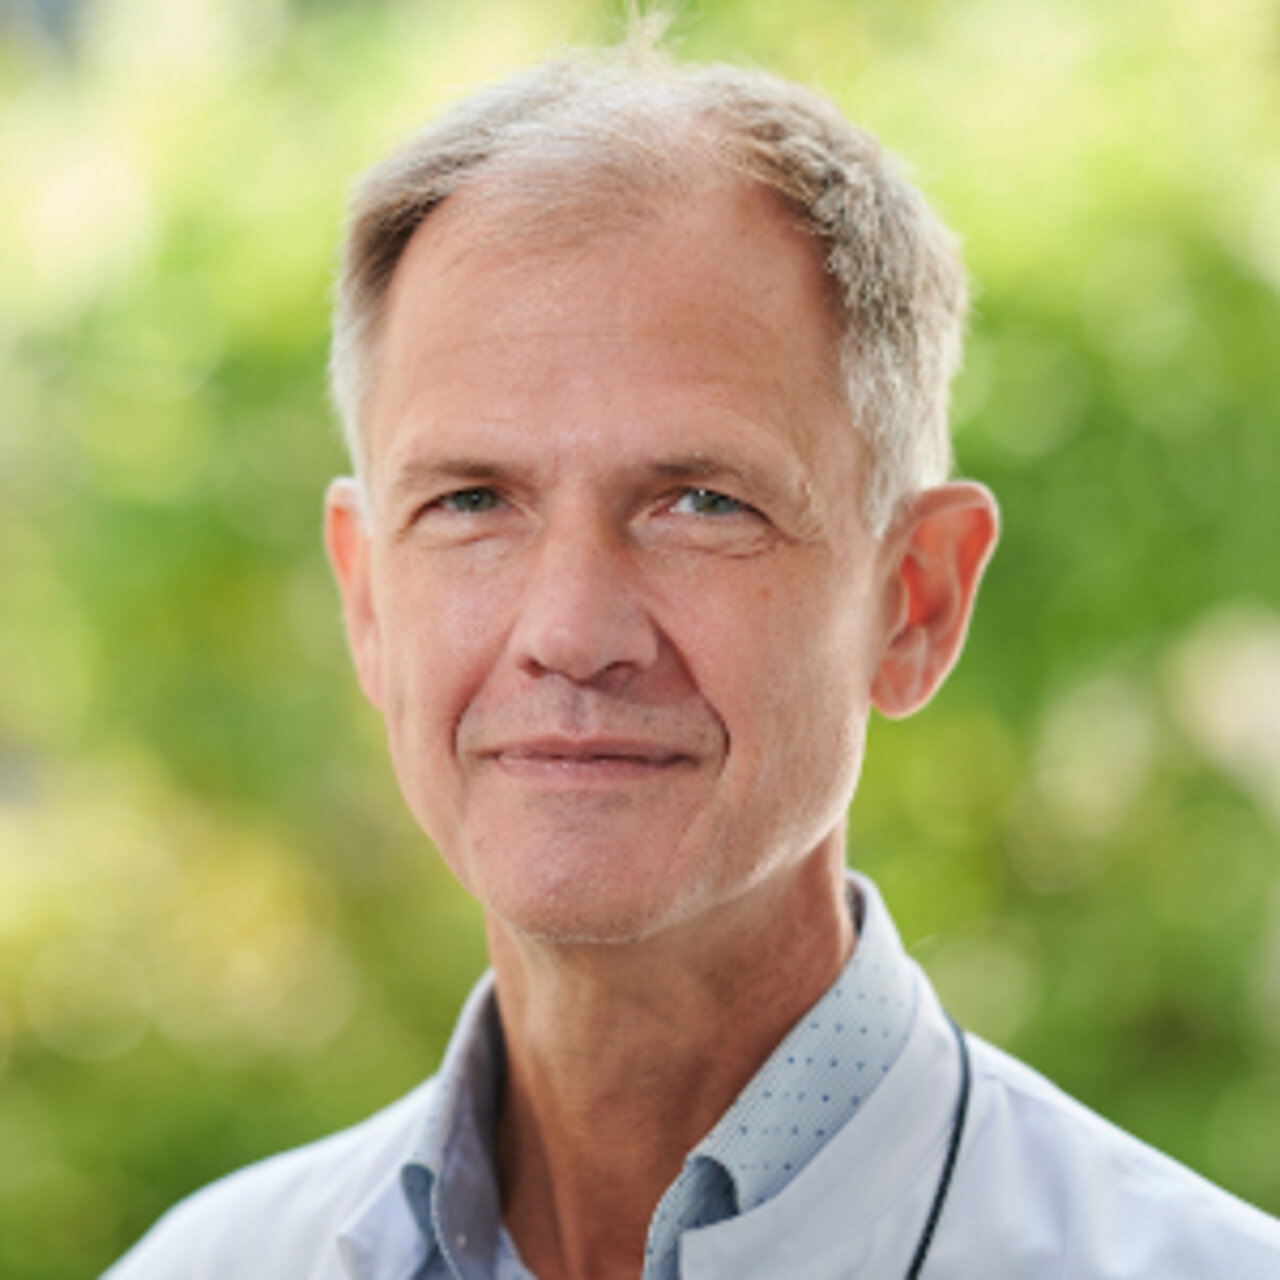 Univ.-Prof. Dr Andreas Rink - Portrait